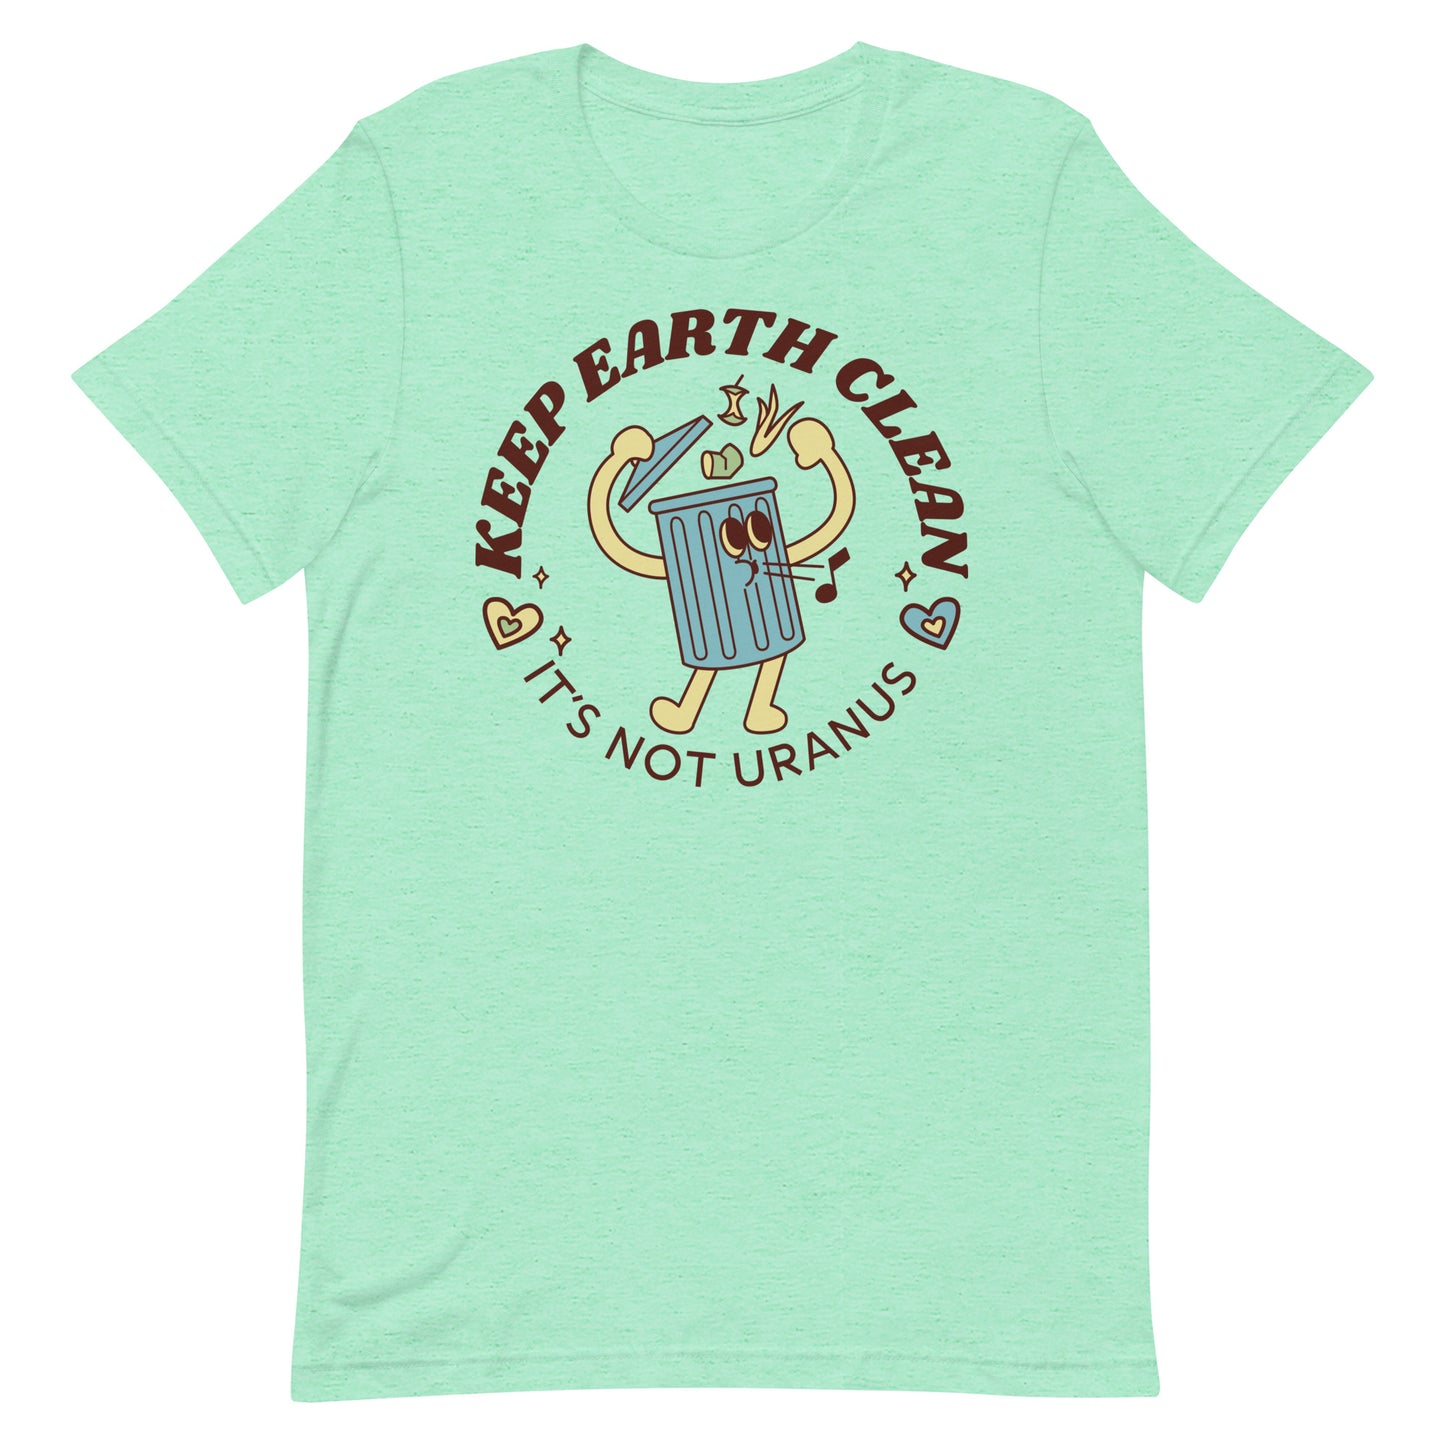 Keep Earth Clean It's Not Uranus Unisex t-shirt